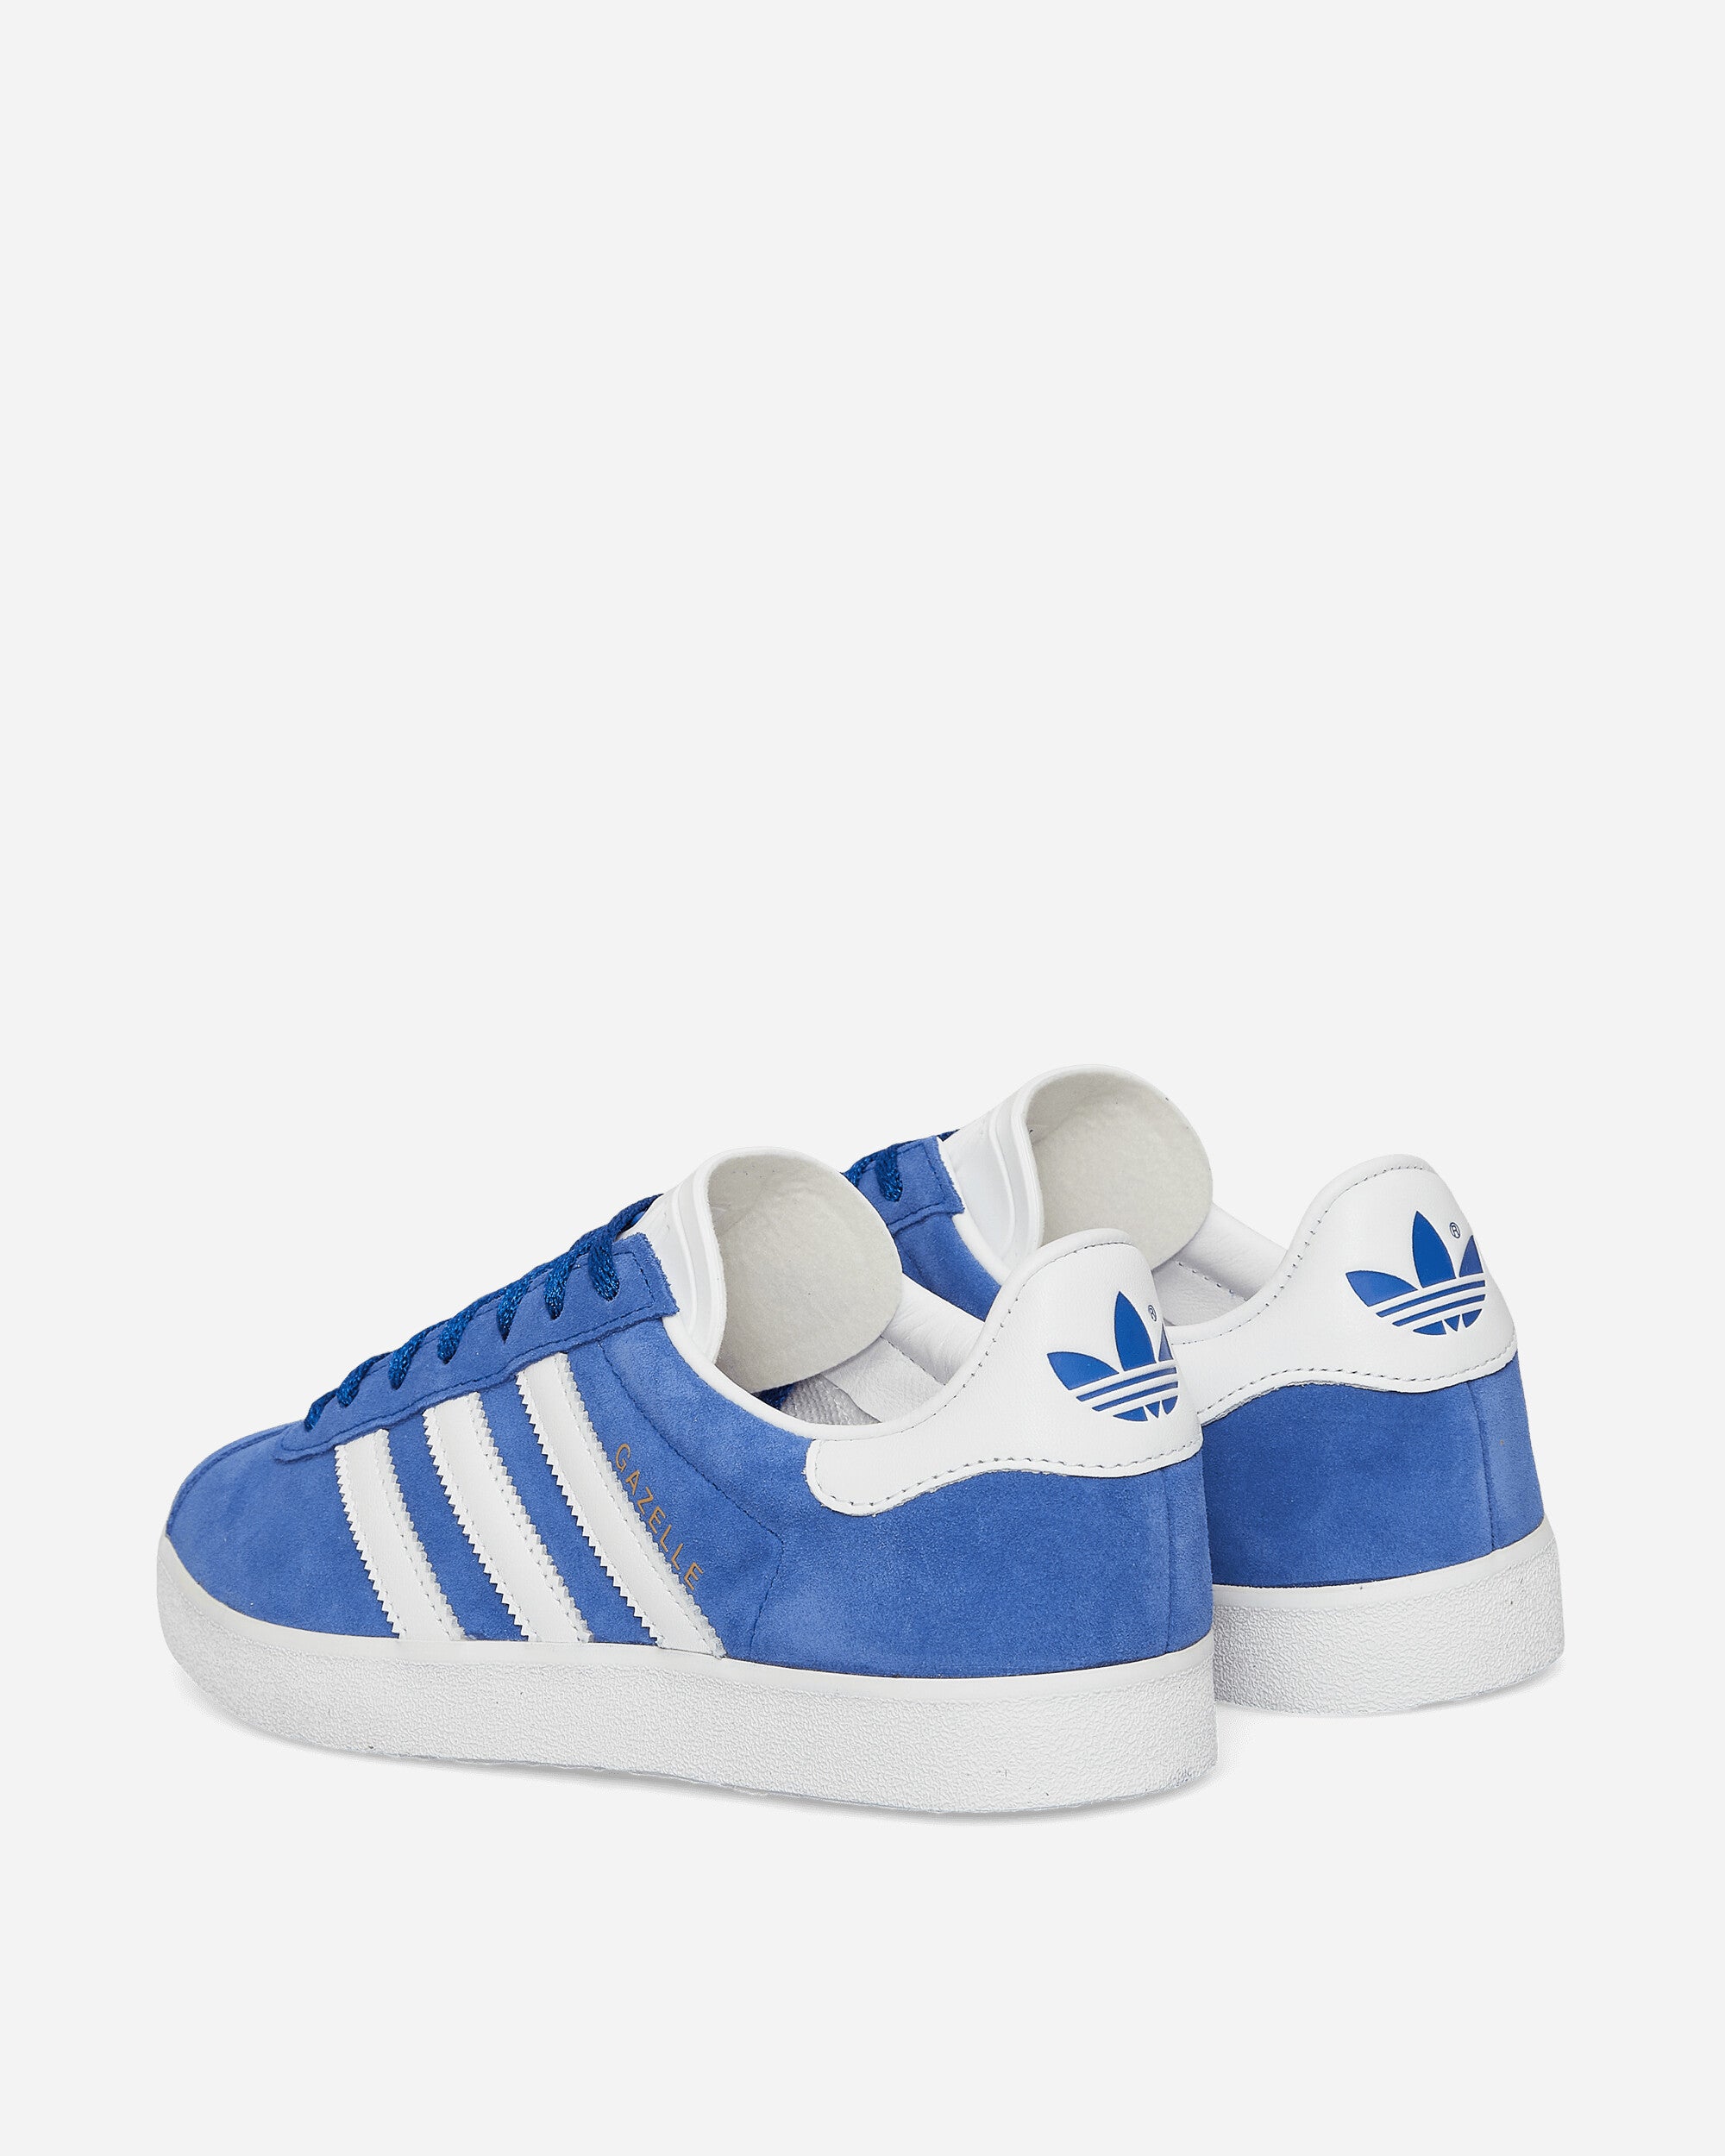 adidas Gazelle 85 Team Royal Blue/Ftwr White Sneakers Low IG0456 001